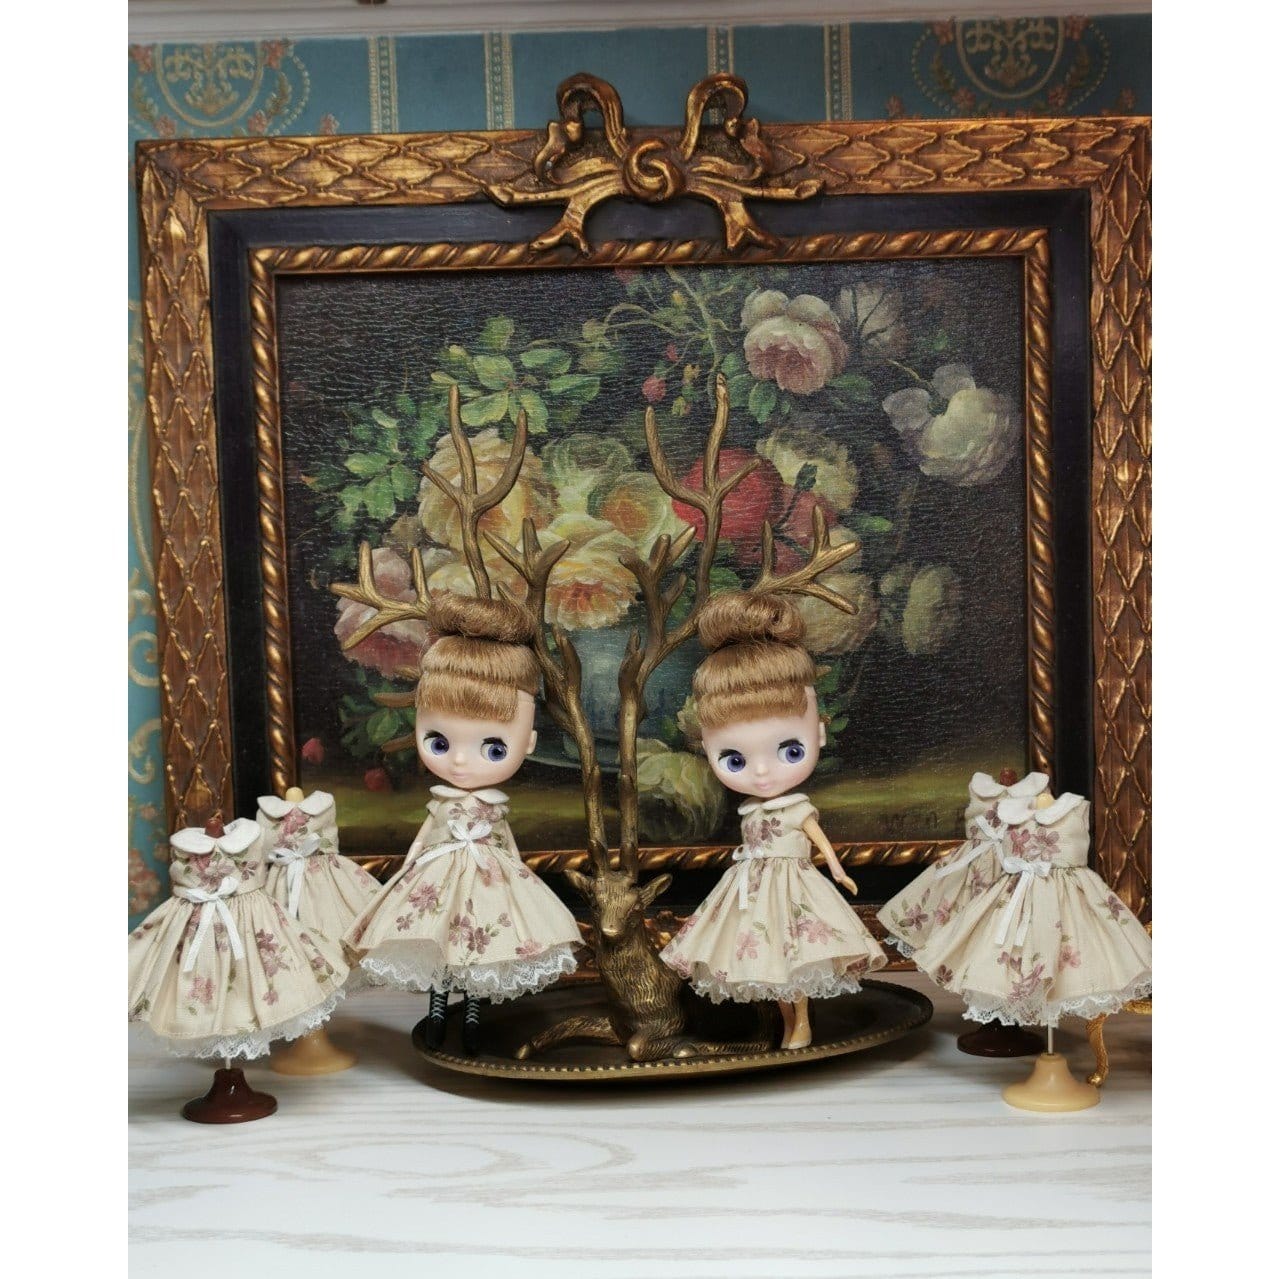 【Yenyumom】Beige Florals Dress Set / Petite Blythe